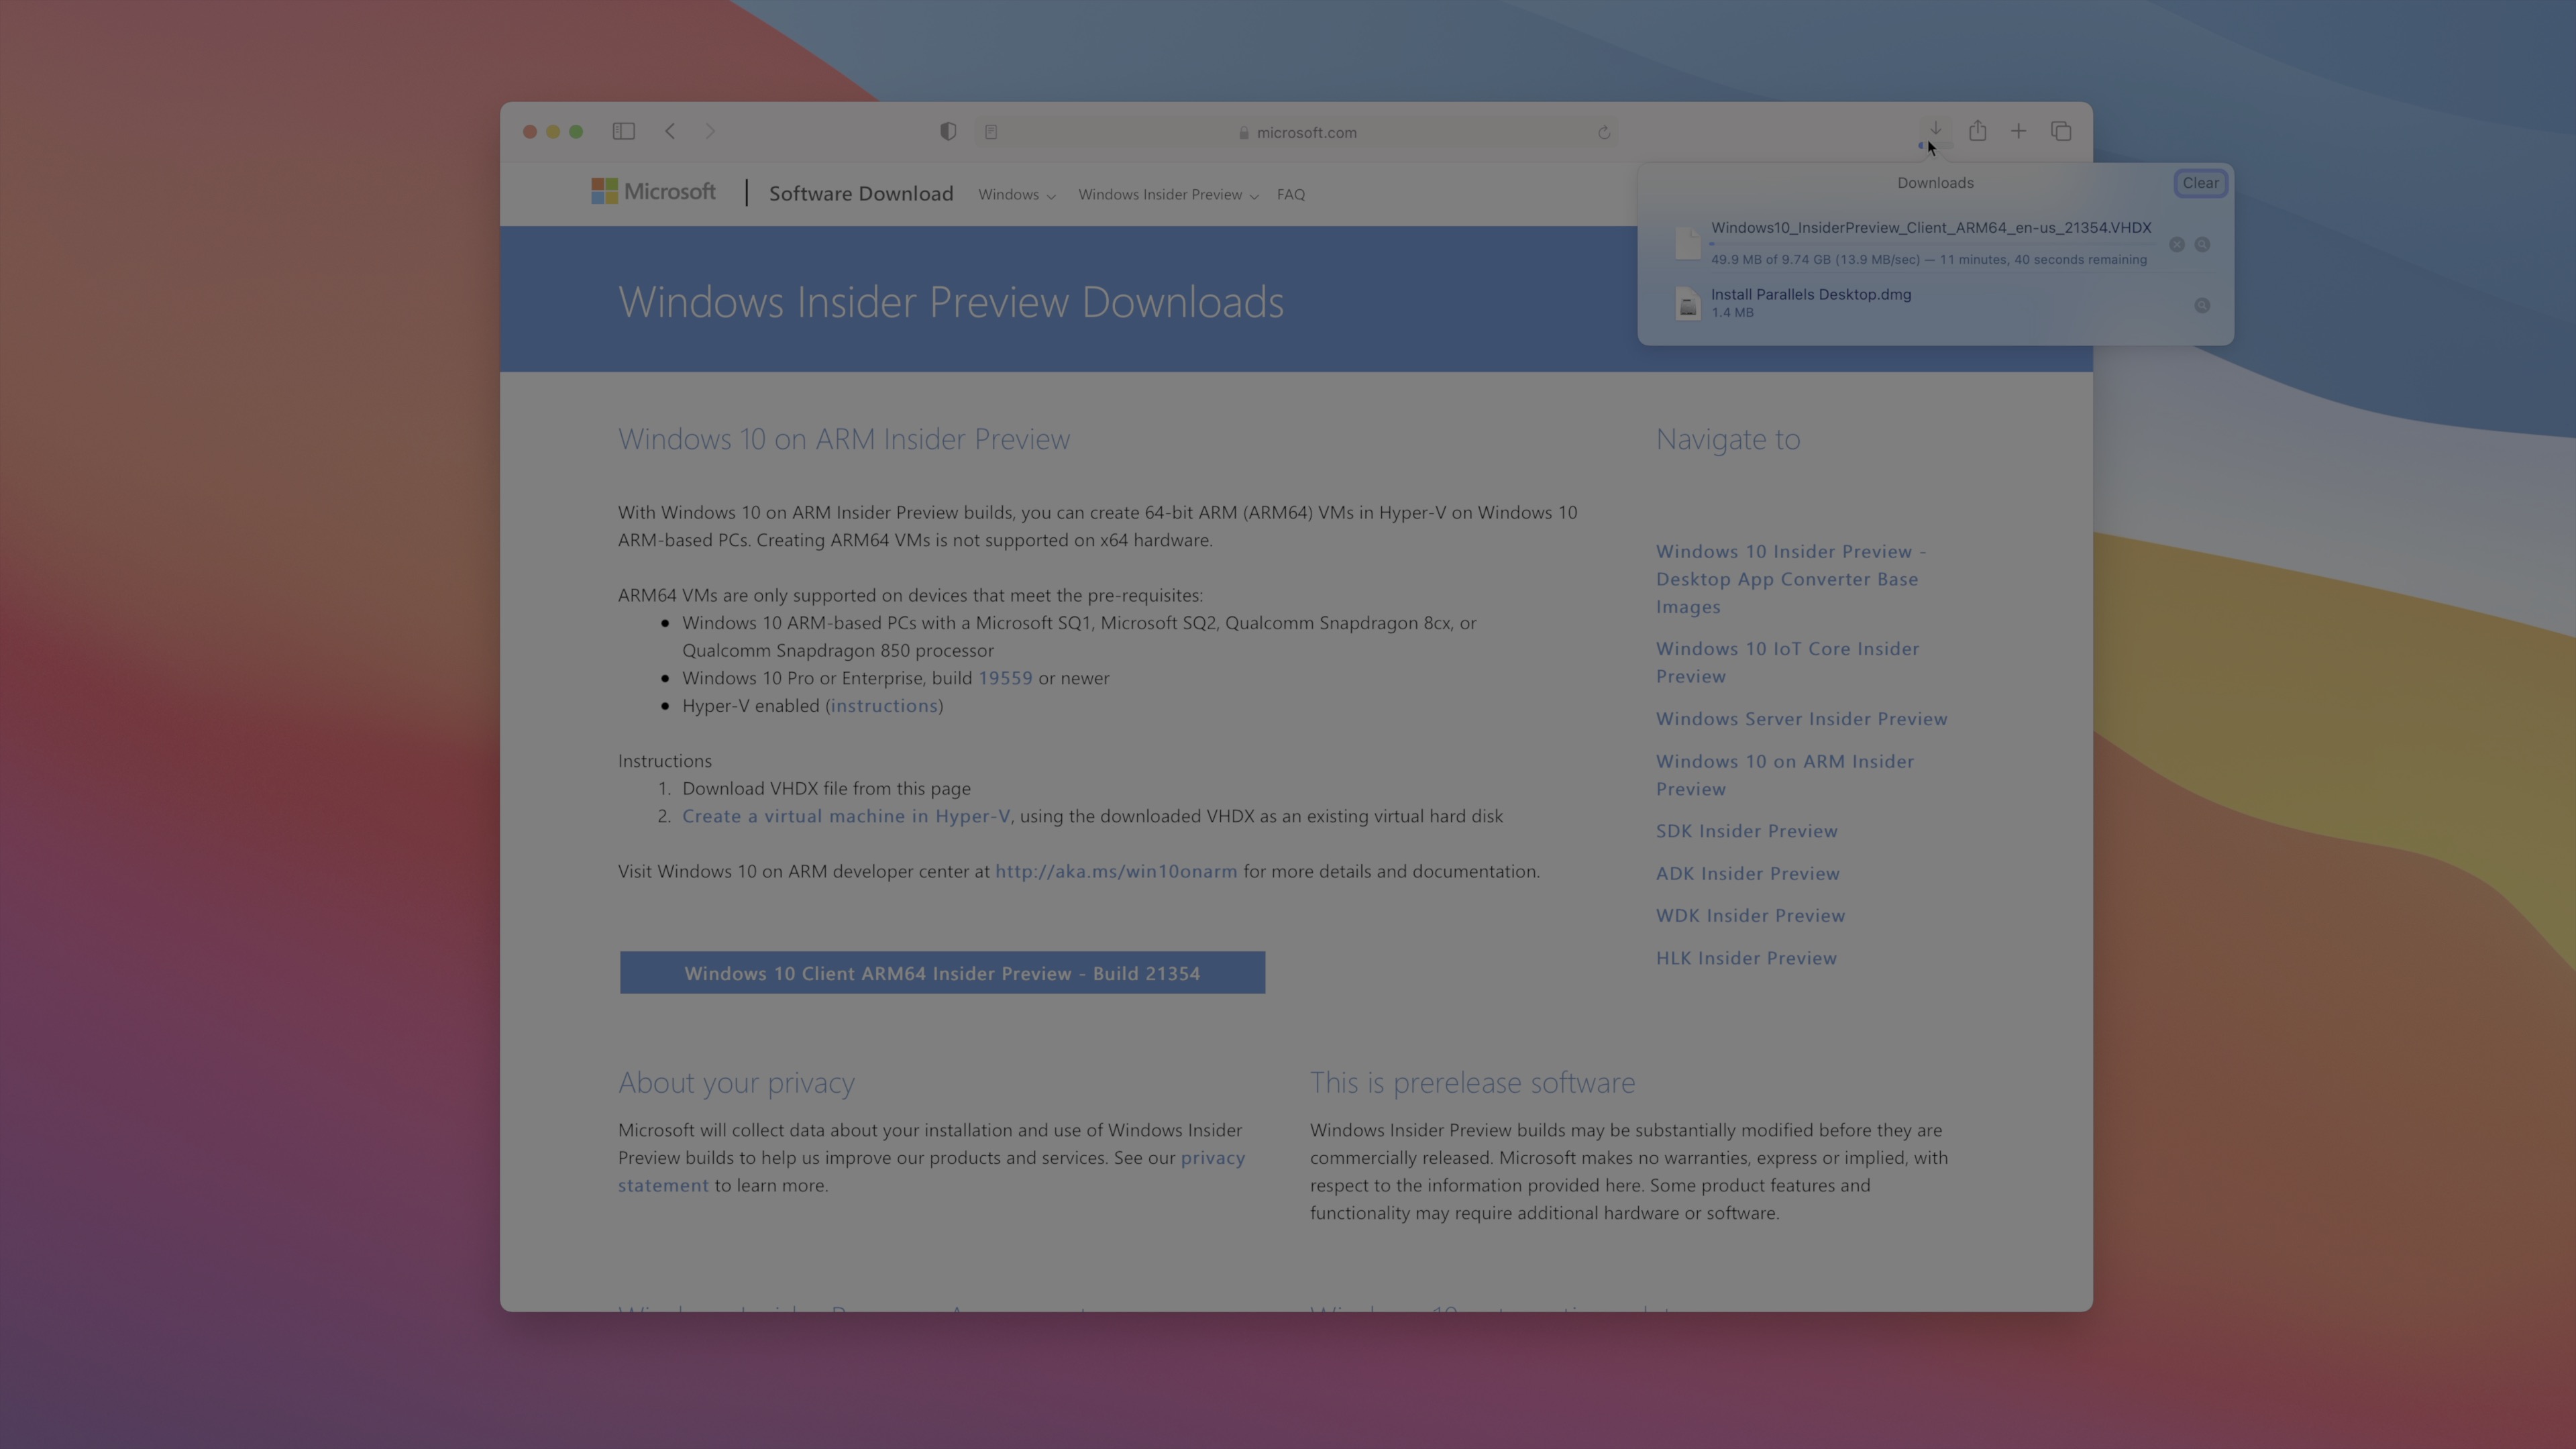 Windows Insider Preview downloading Windows 10